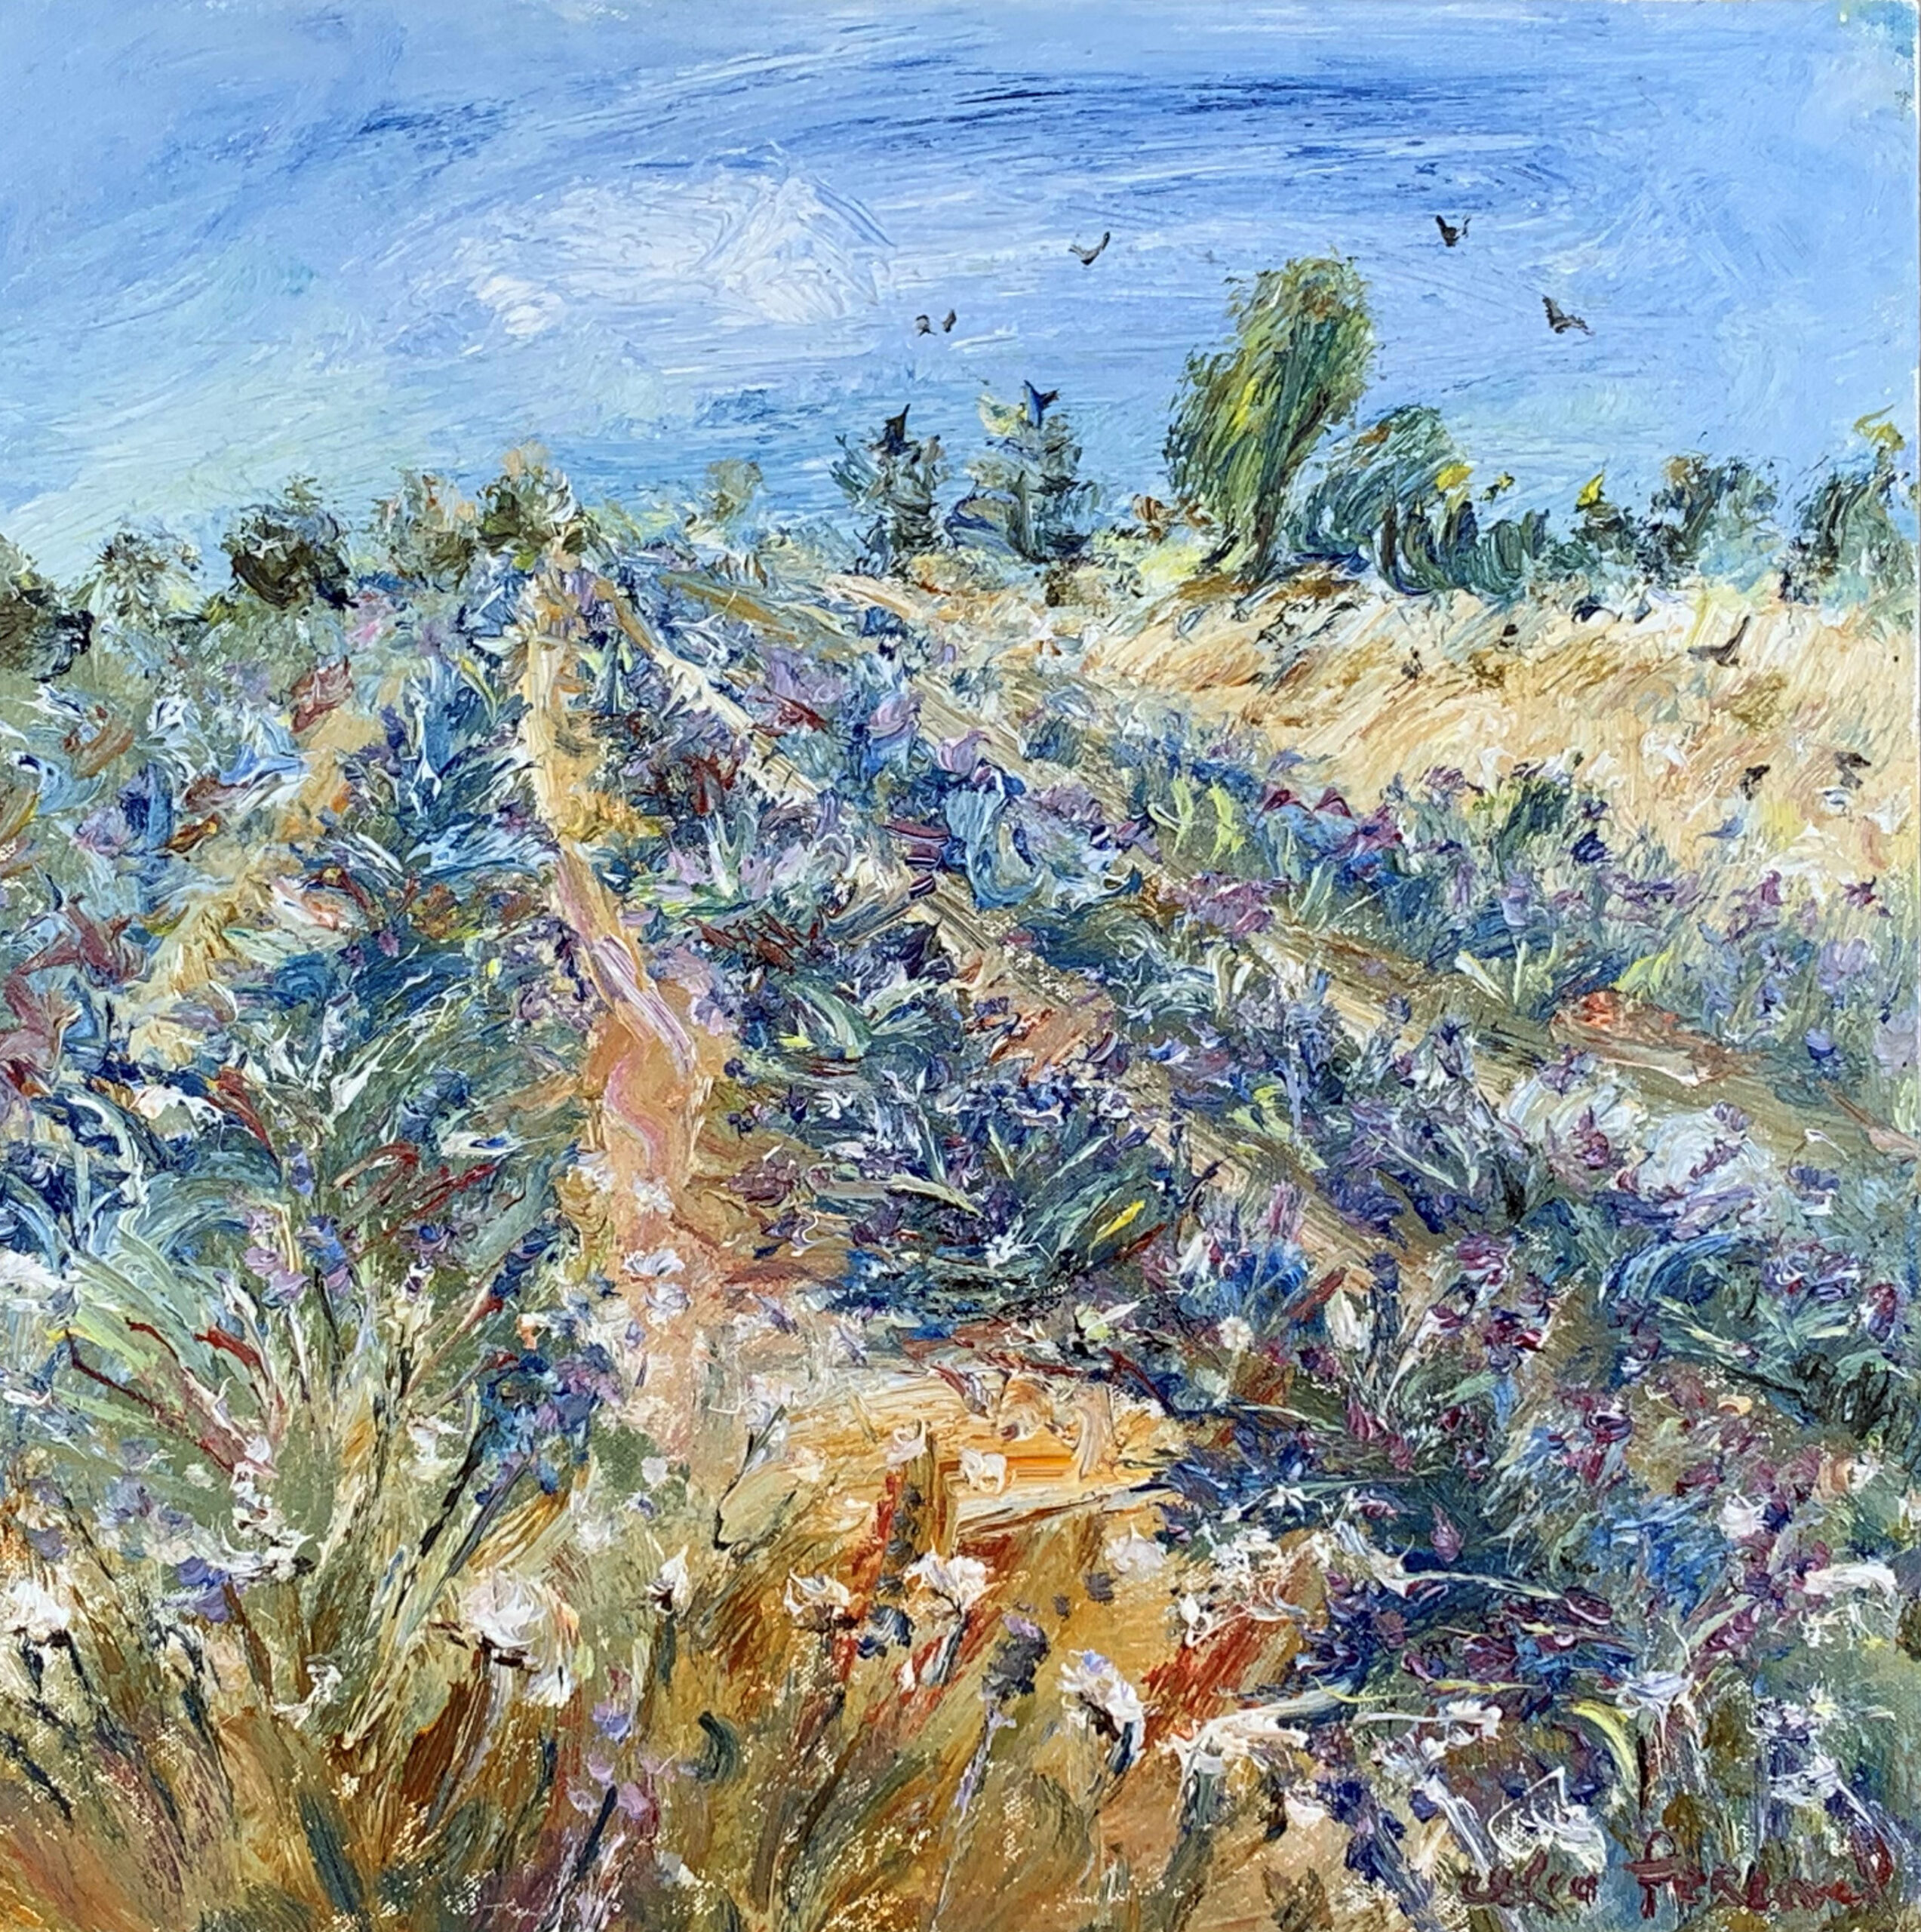 Perceval_Lavender Fields Above Castellane, France_oil on canvas_40 x40_master